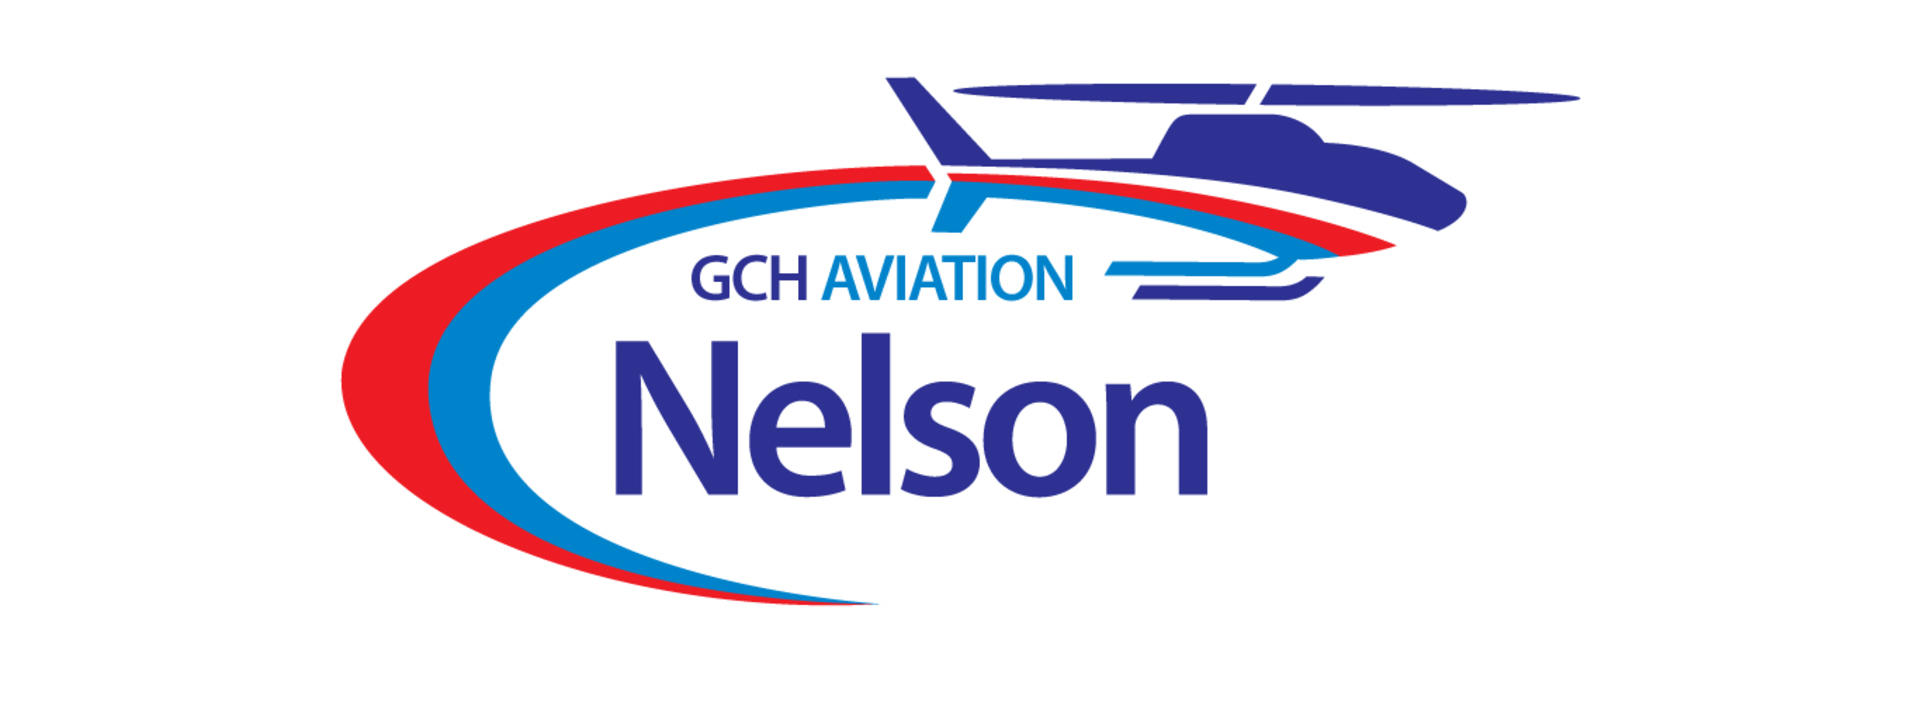 gch_nelson_logo-002_0.jpg